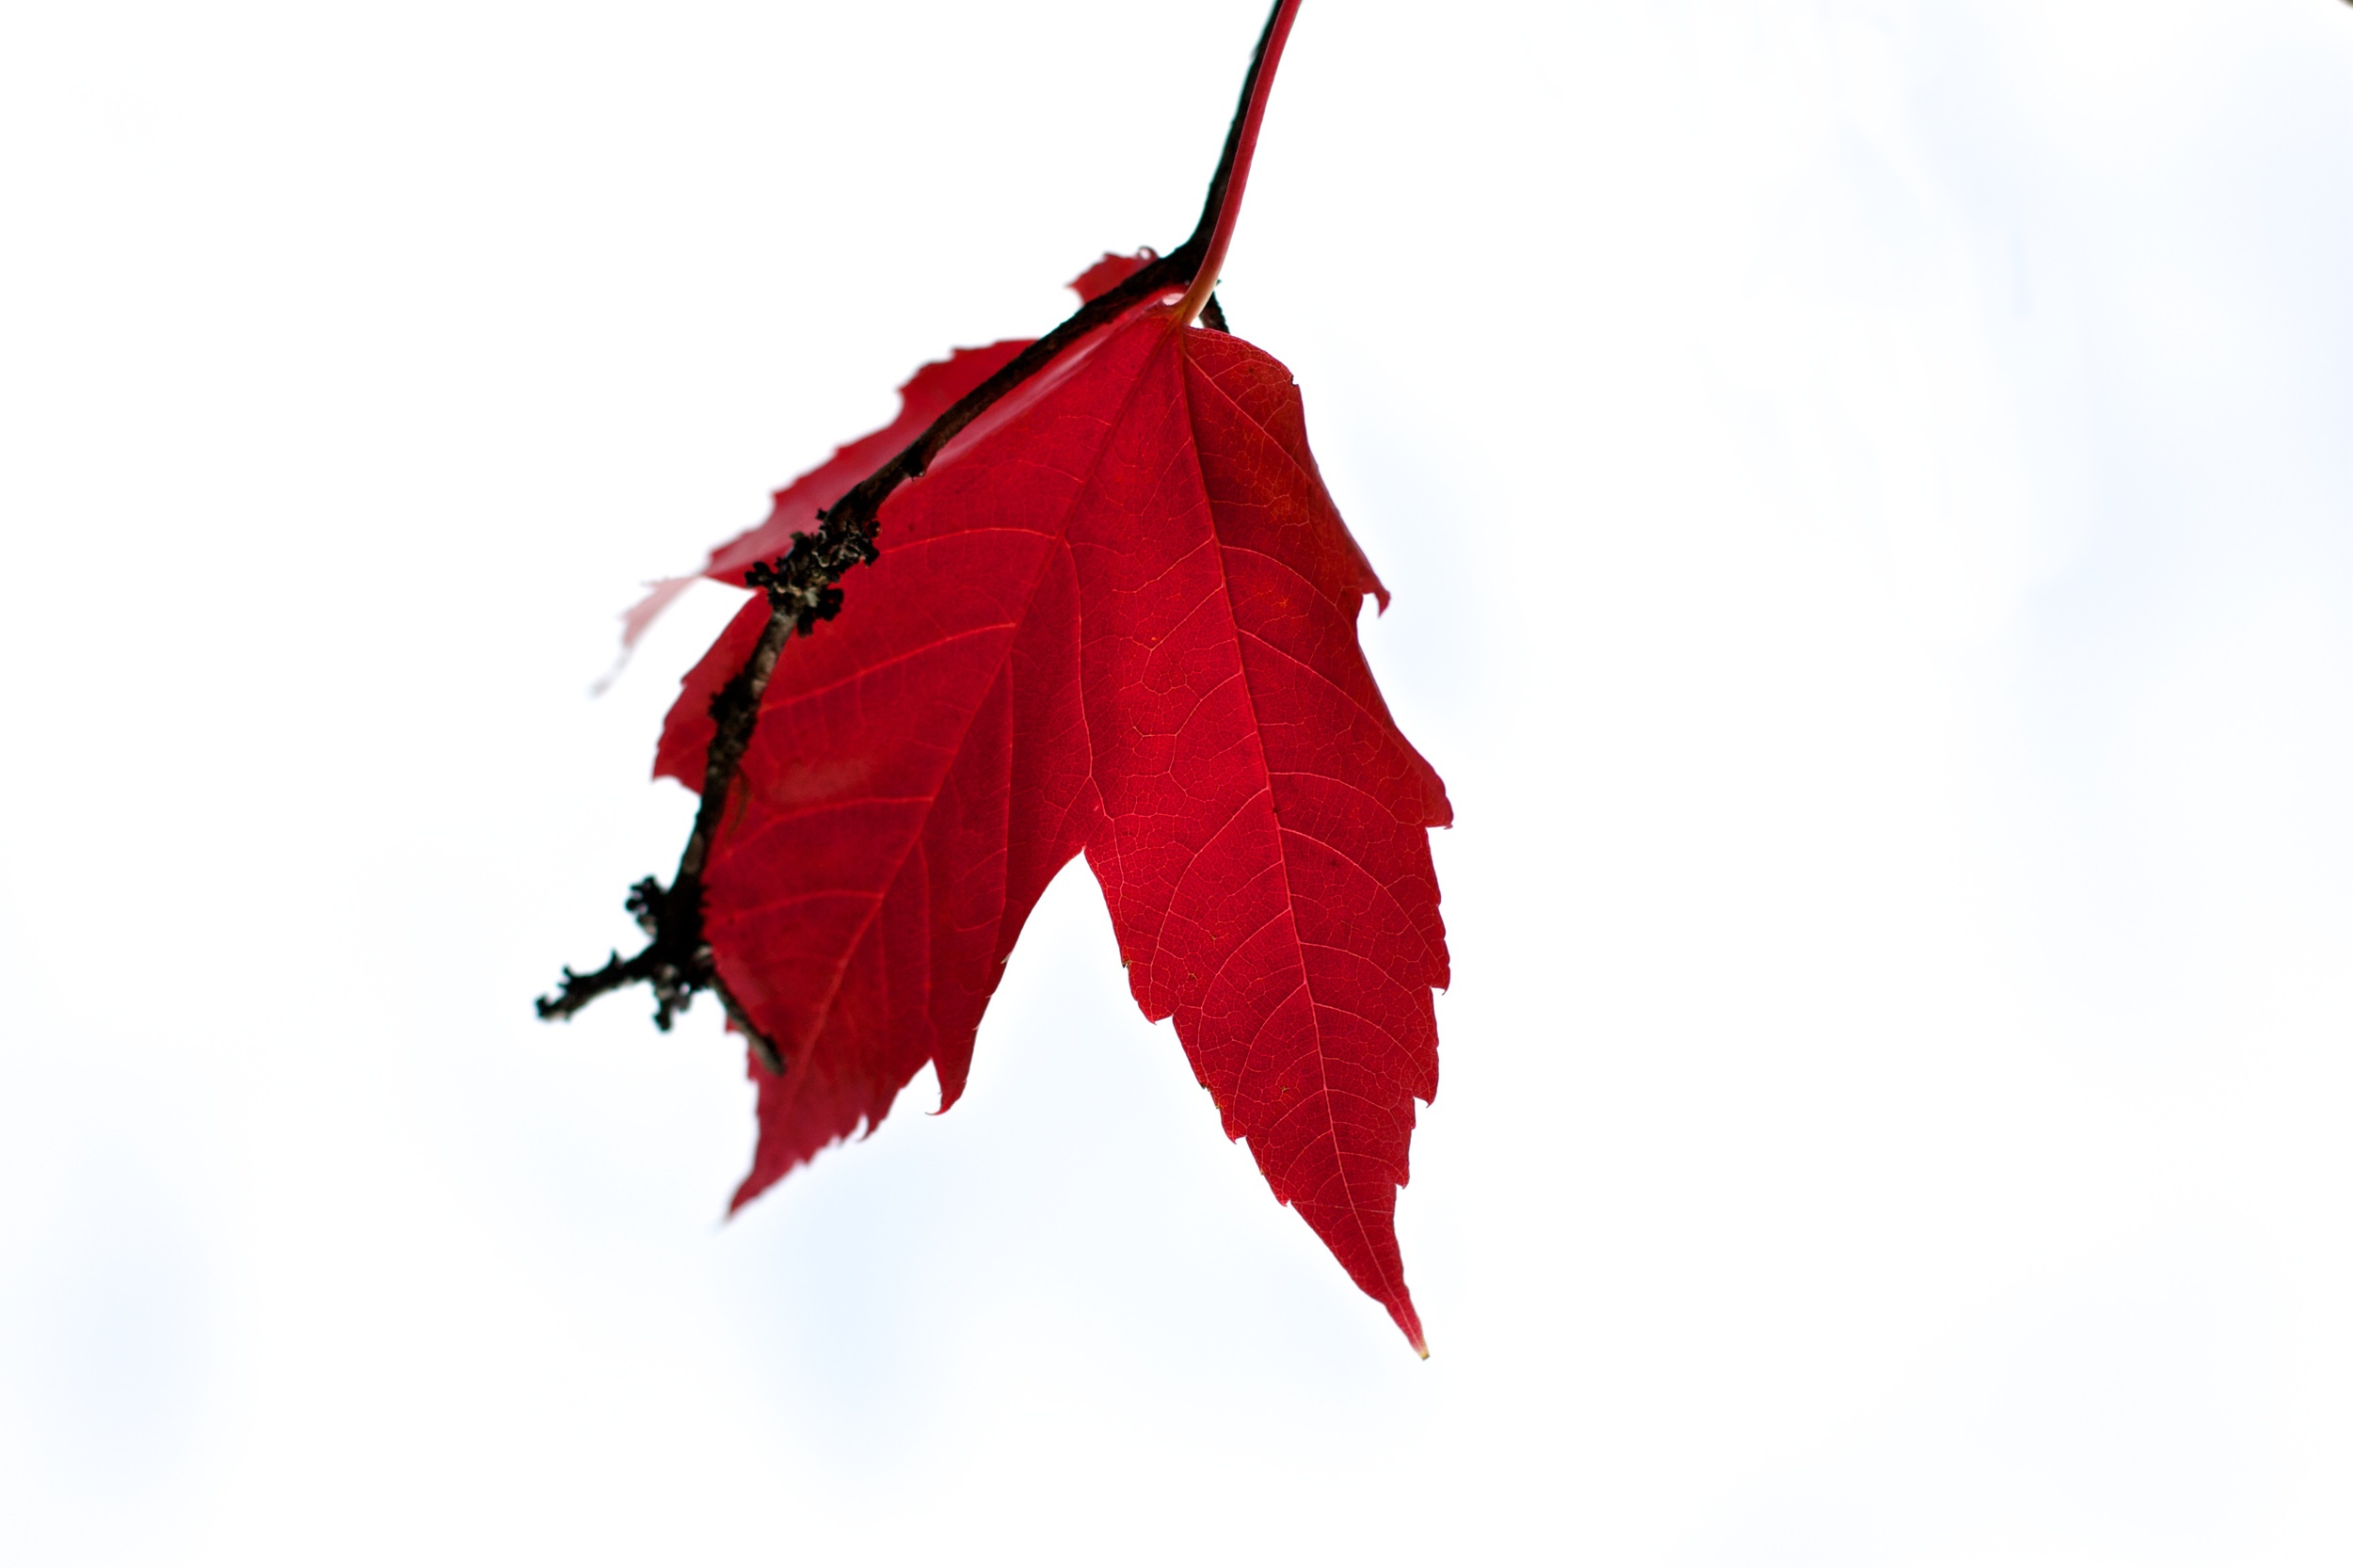 2009-10-10 at 11-27-24 Leaf, Still Life, Red, White, High Key, Transluscent.jpg